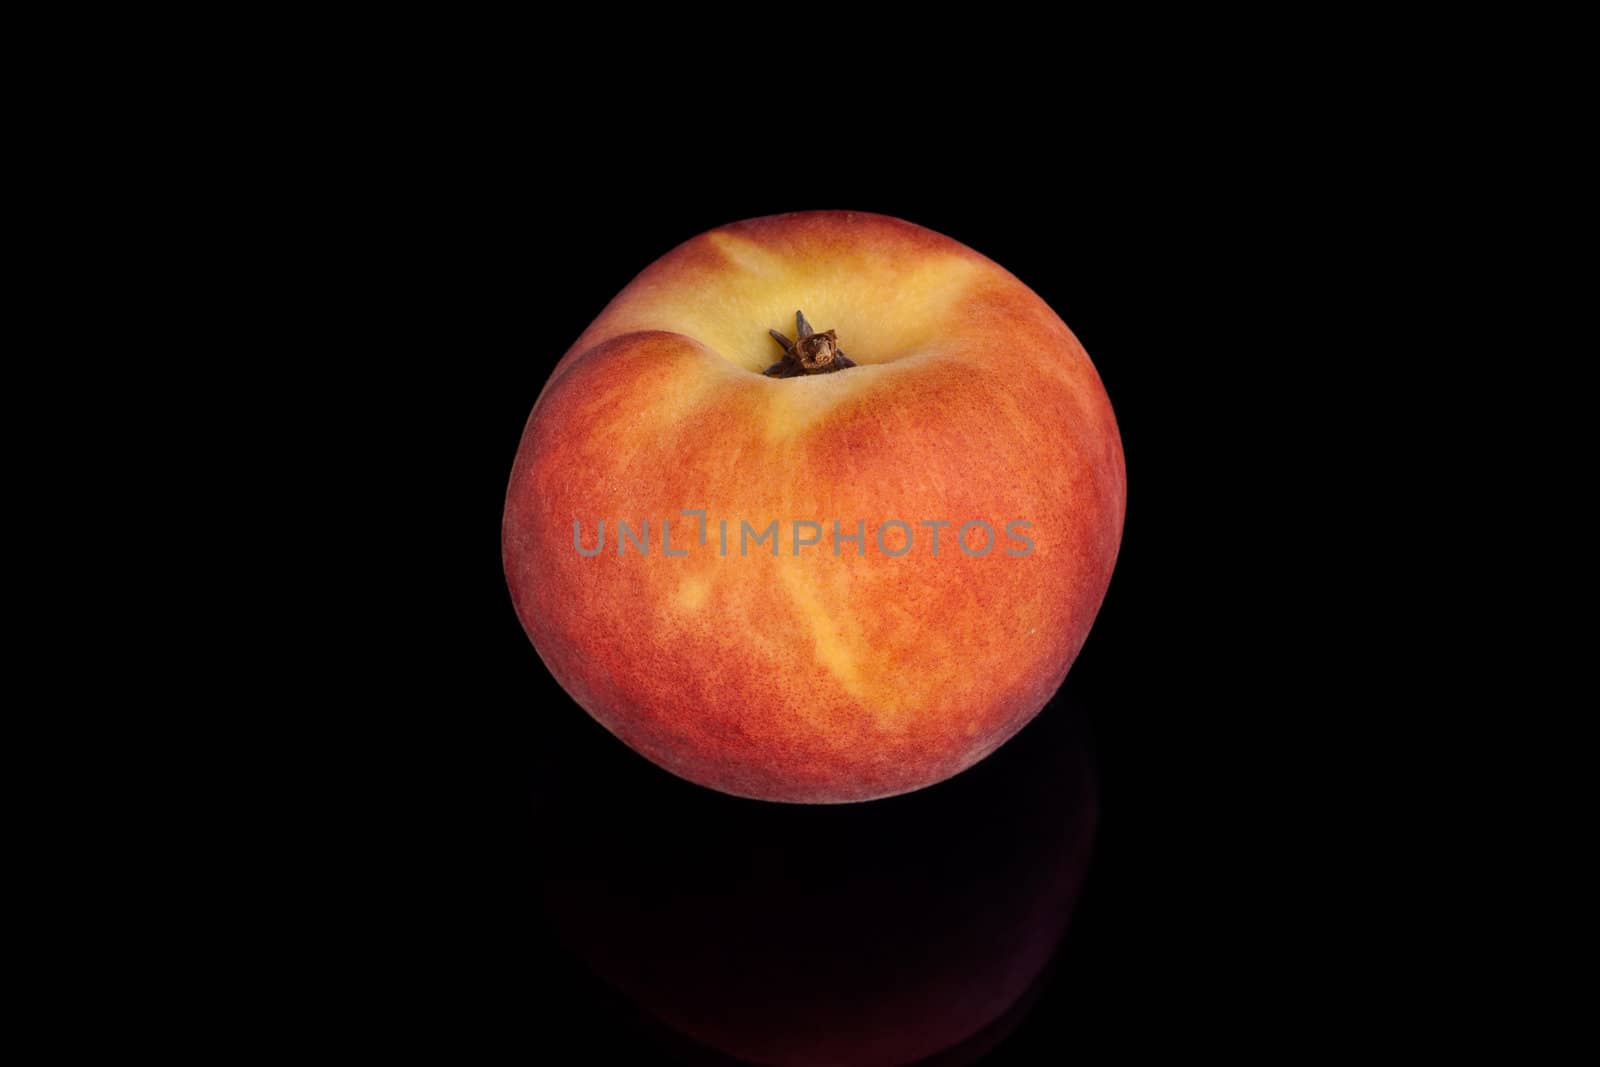 Fresh peach image on the black background